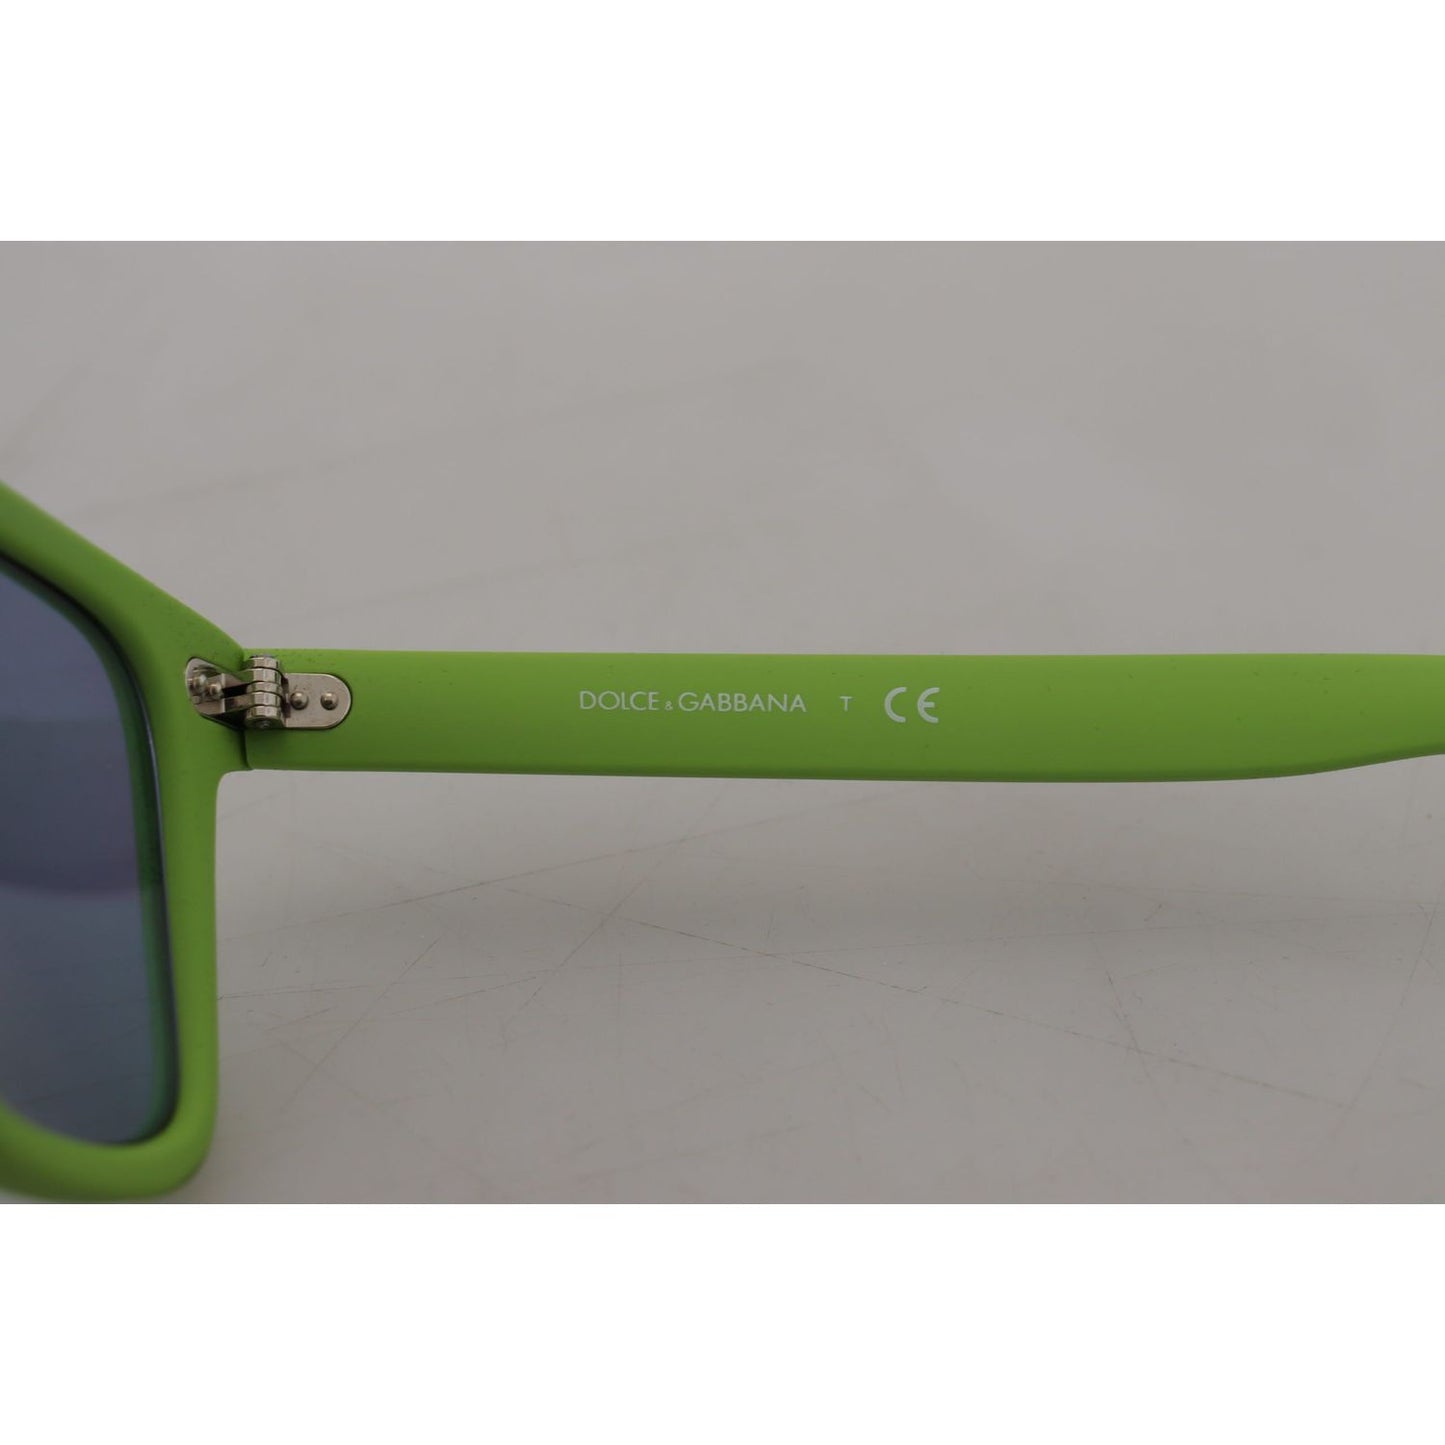 Dolce & Gabbana Acid Green Chic Full Rim Sunglasses green-rubber-full-rim-frame-shades-dg6095-acid-sunglasses IMG_4207-scaled-0d2970fa-9a0.jpg